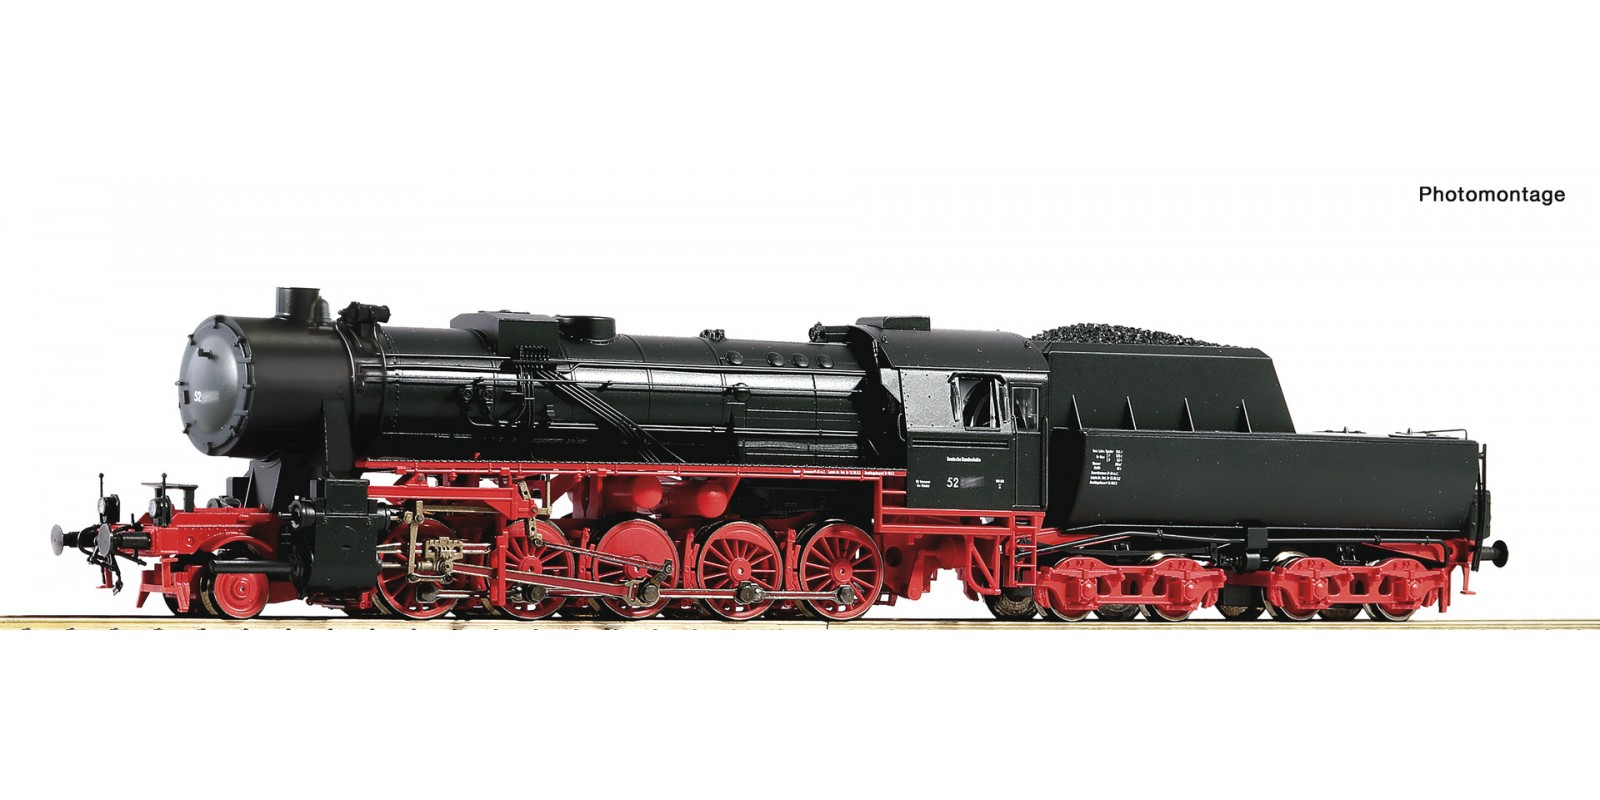 RO70276 Steam locomotive 52 2443